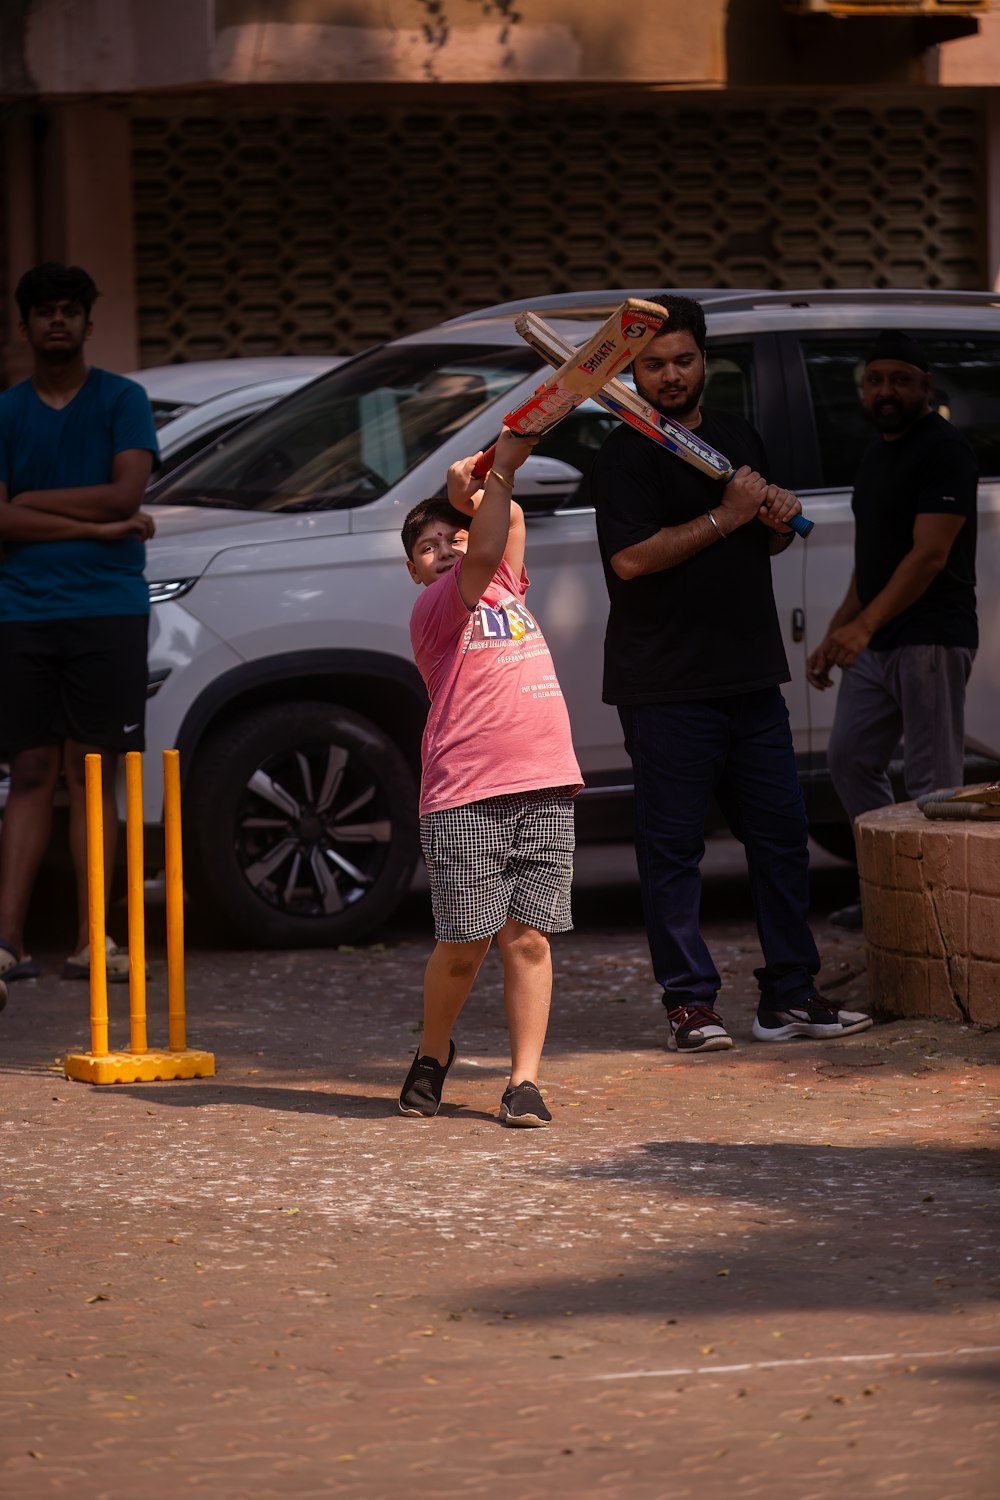 a small child swinging a bat at a ball